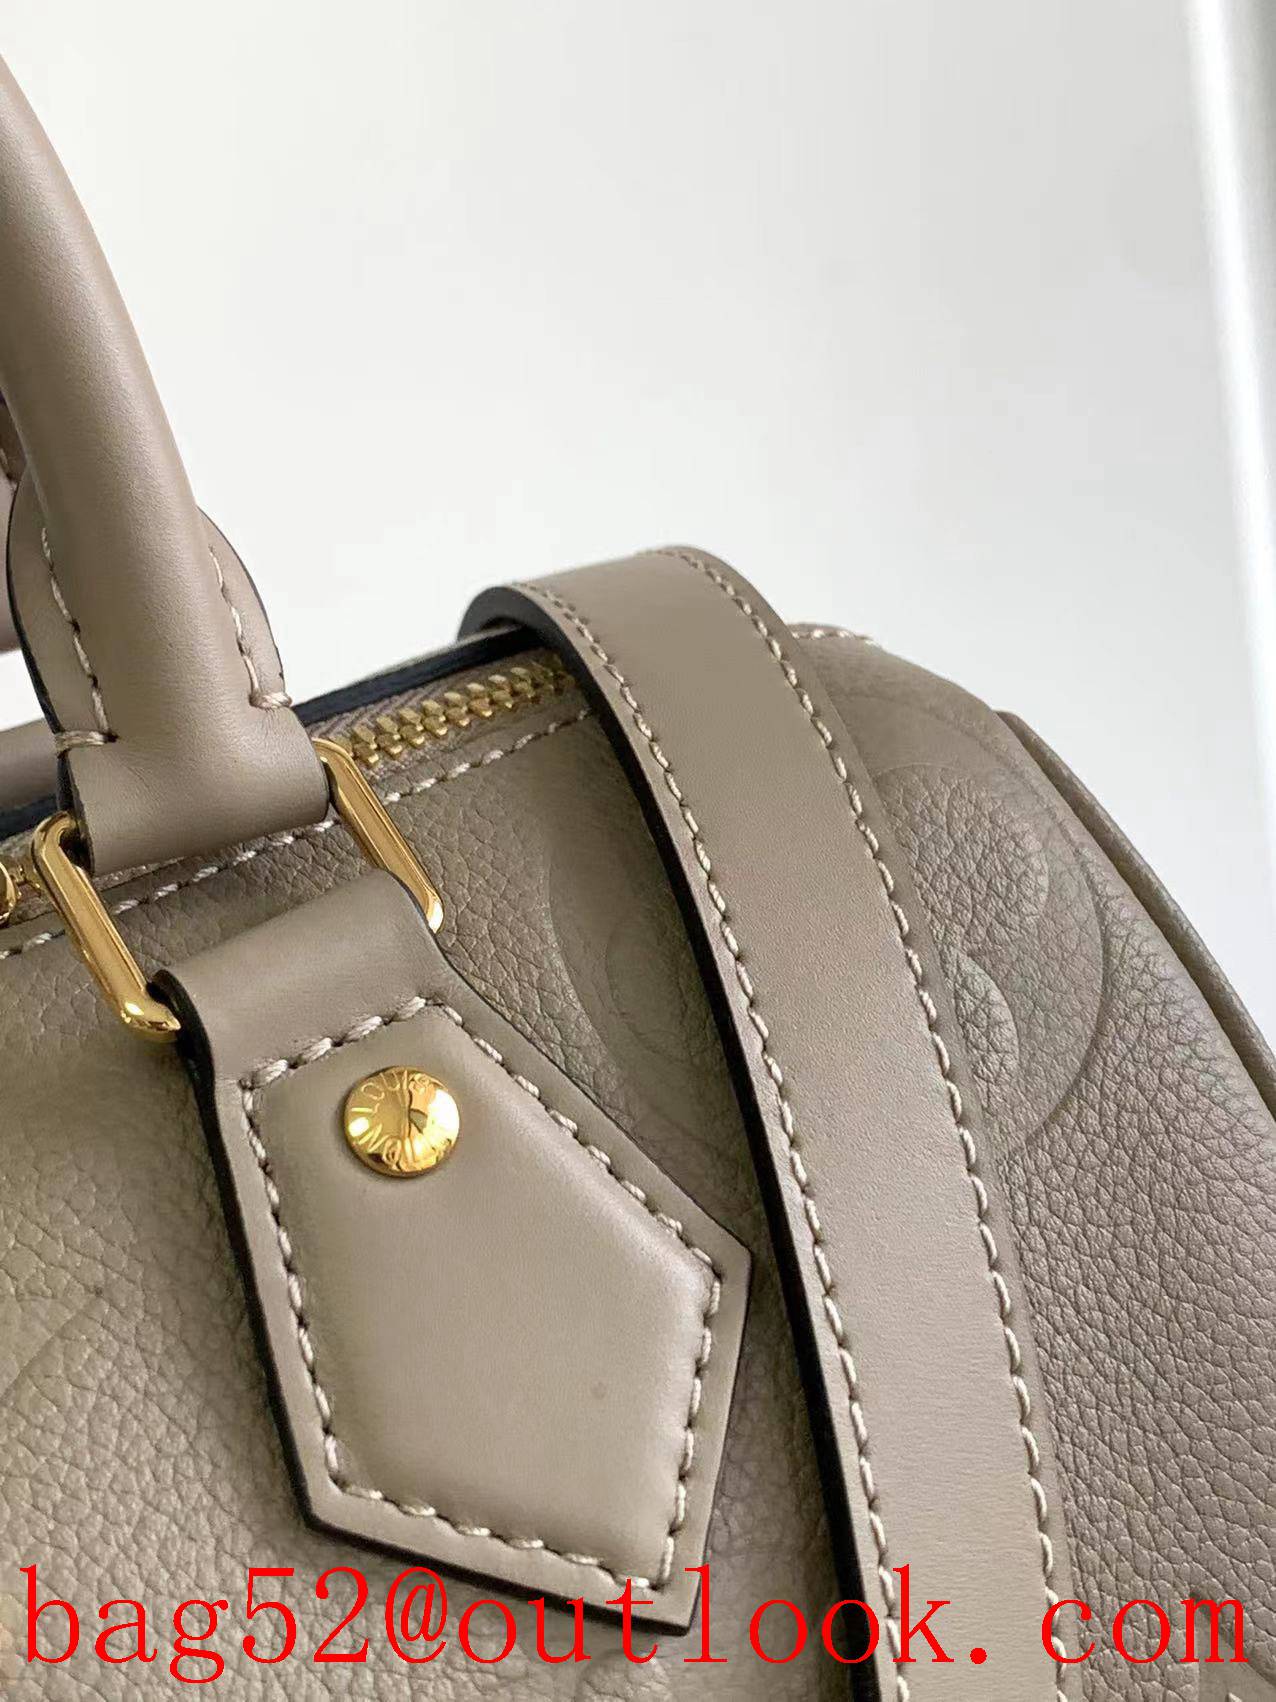 LV Louis Vuitton Monogram Speedy Bandouliere 25 Bag Handbag M59273 Khaki